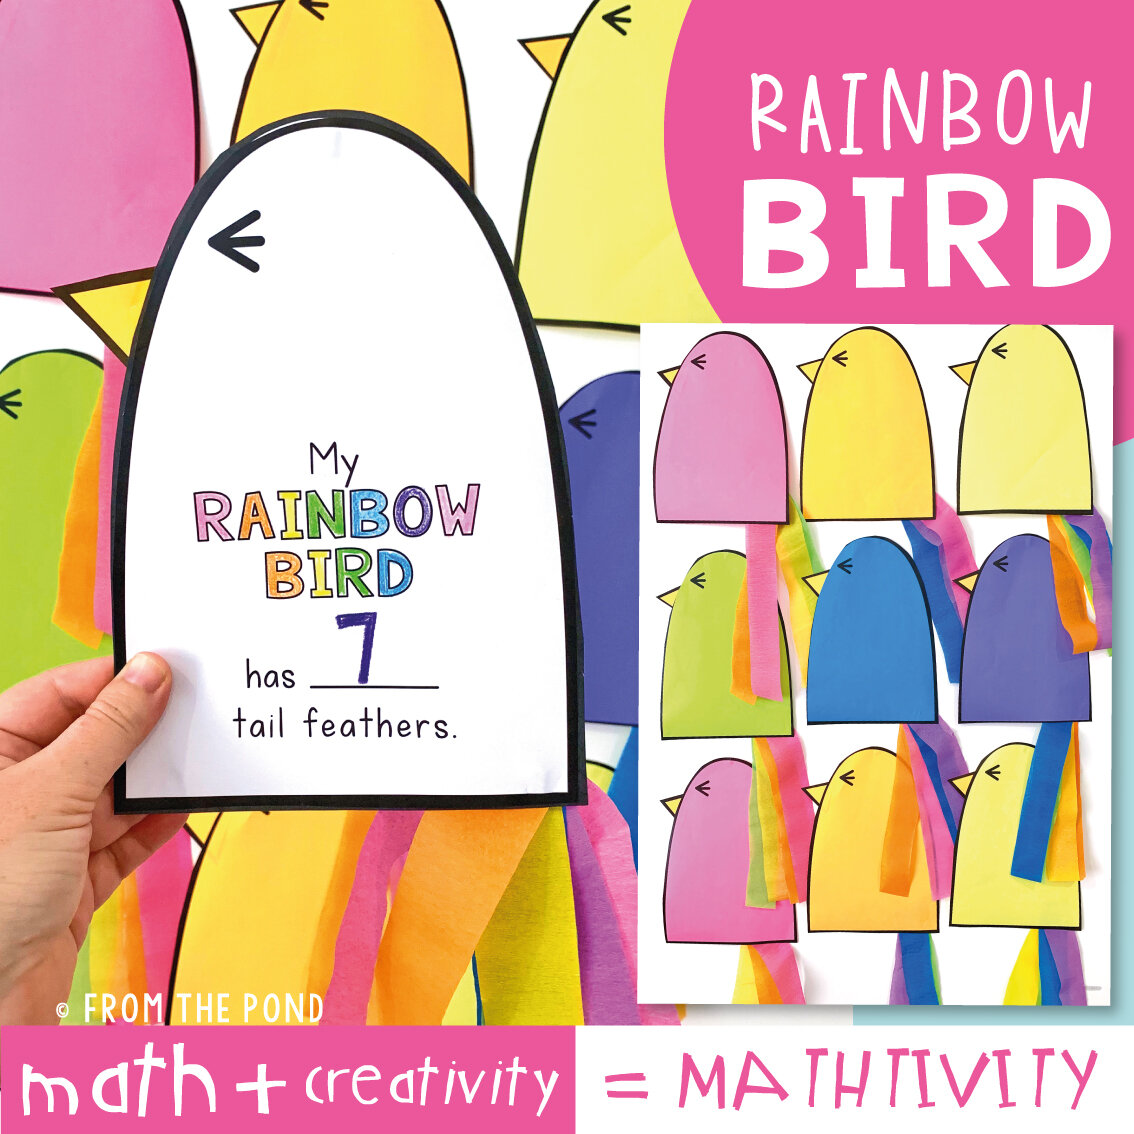 rainbow-bird-mathtivity-pic-01.jpg